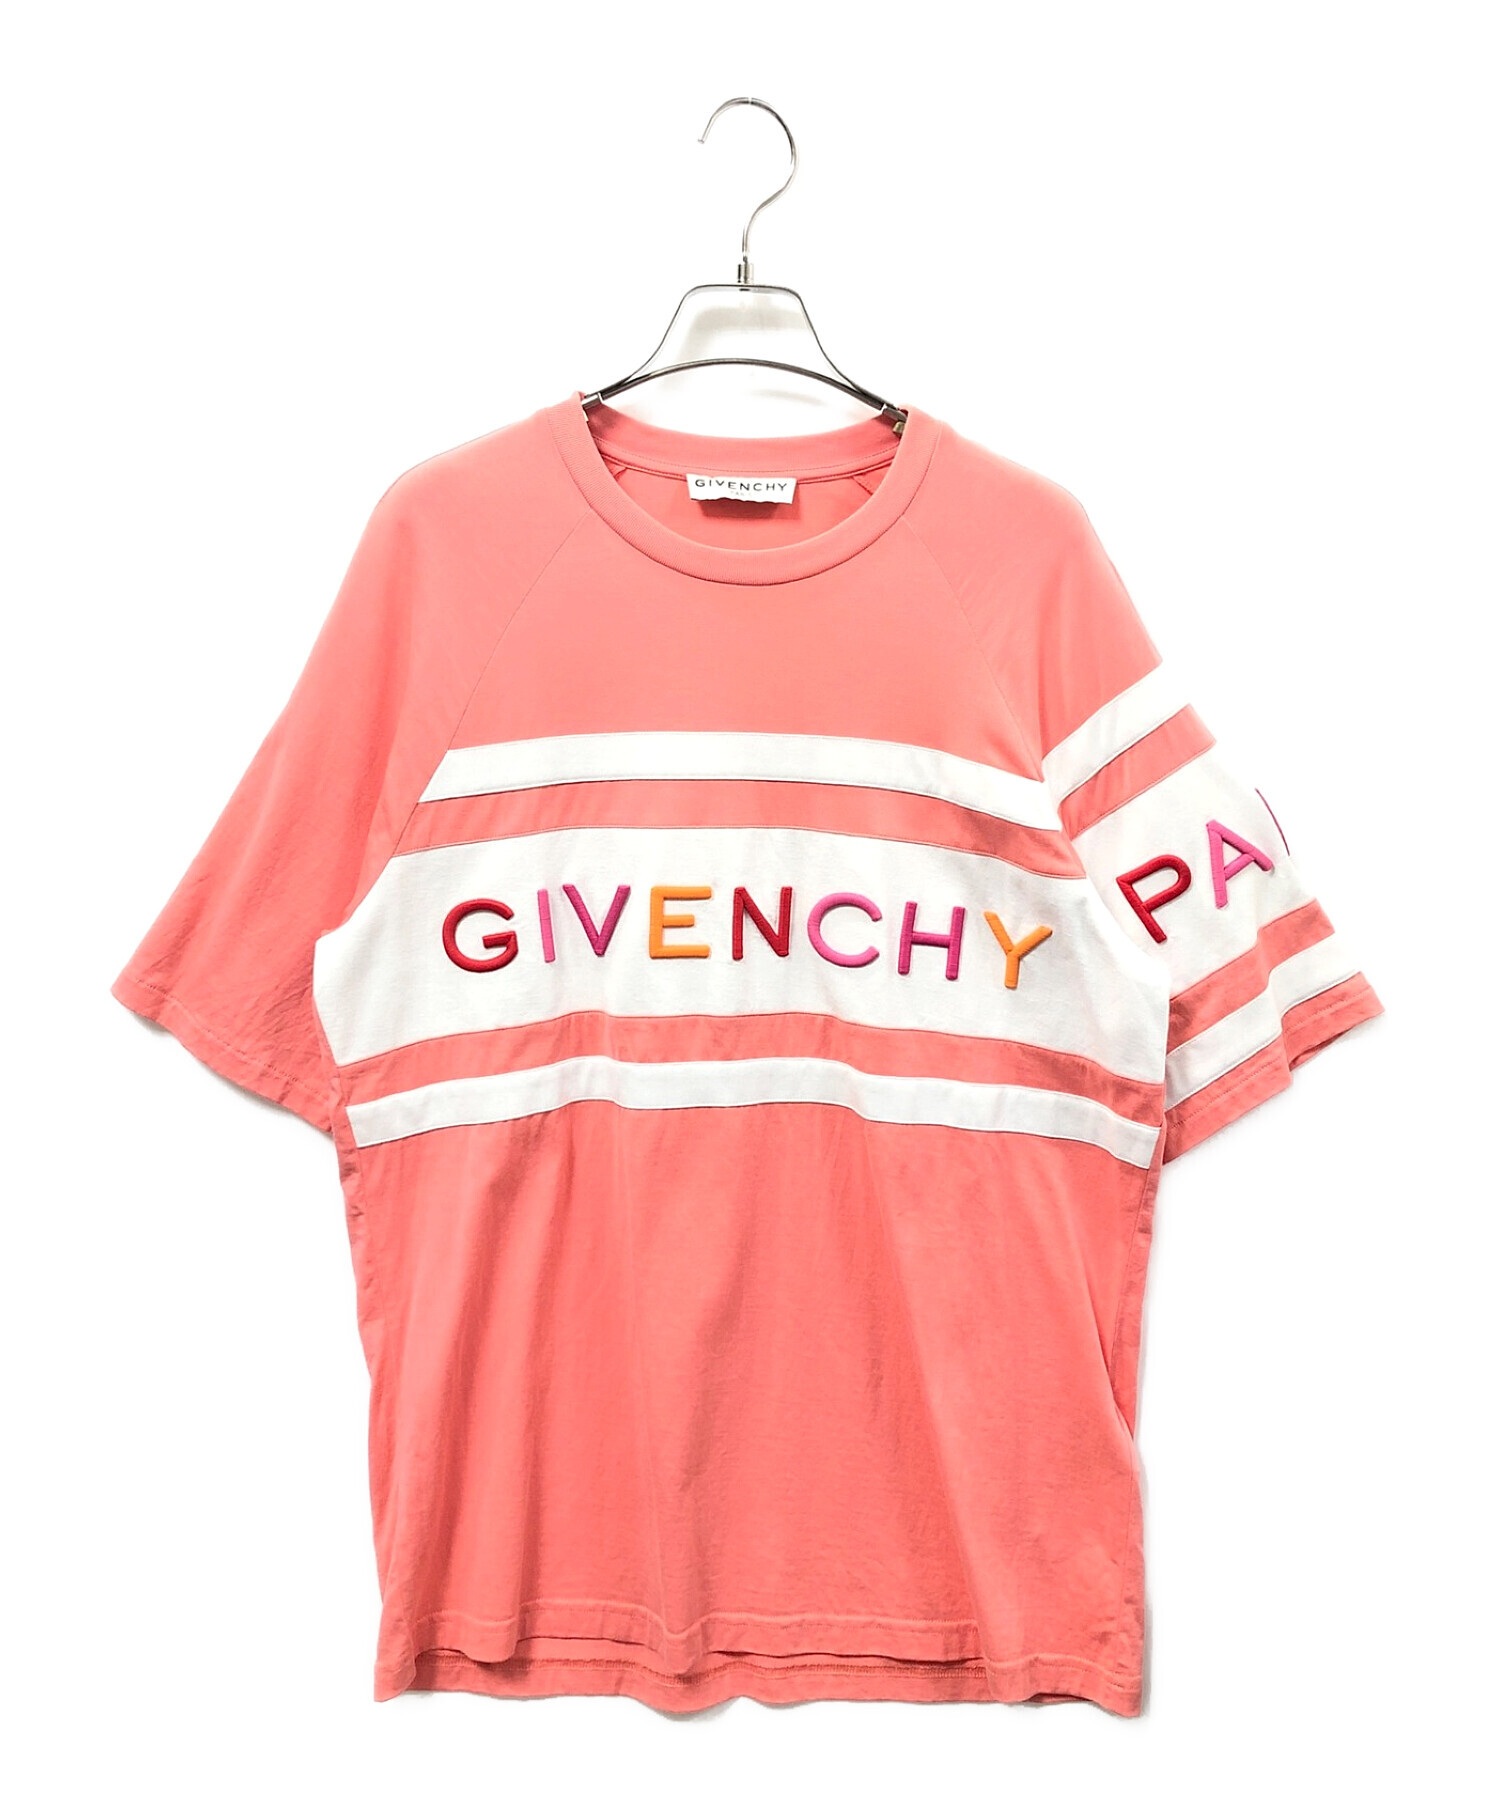 GIVENCHY (ジバンシィ) ロゴTシャツ/半袖カットソー/ロゴカットソー ピンク サイズ:XS